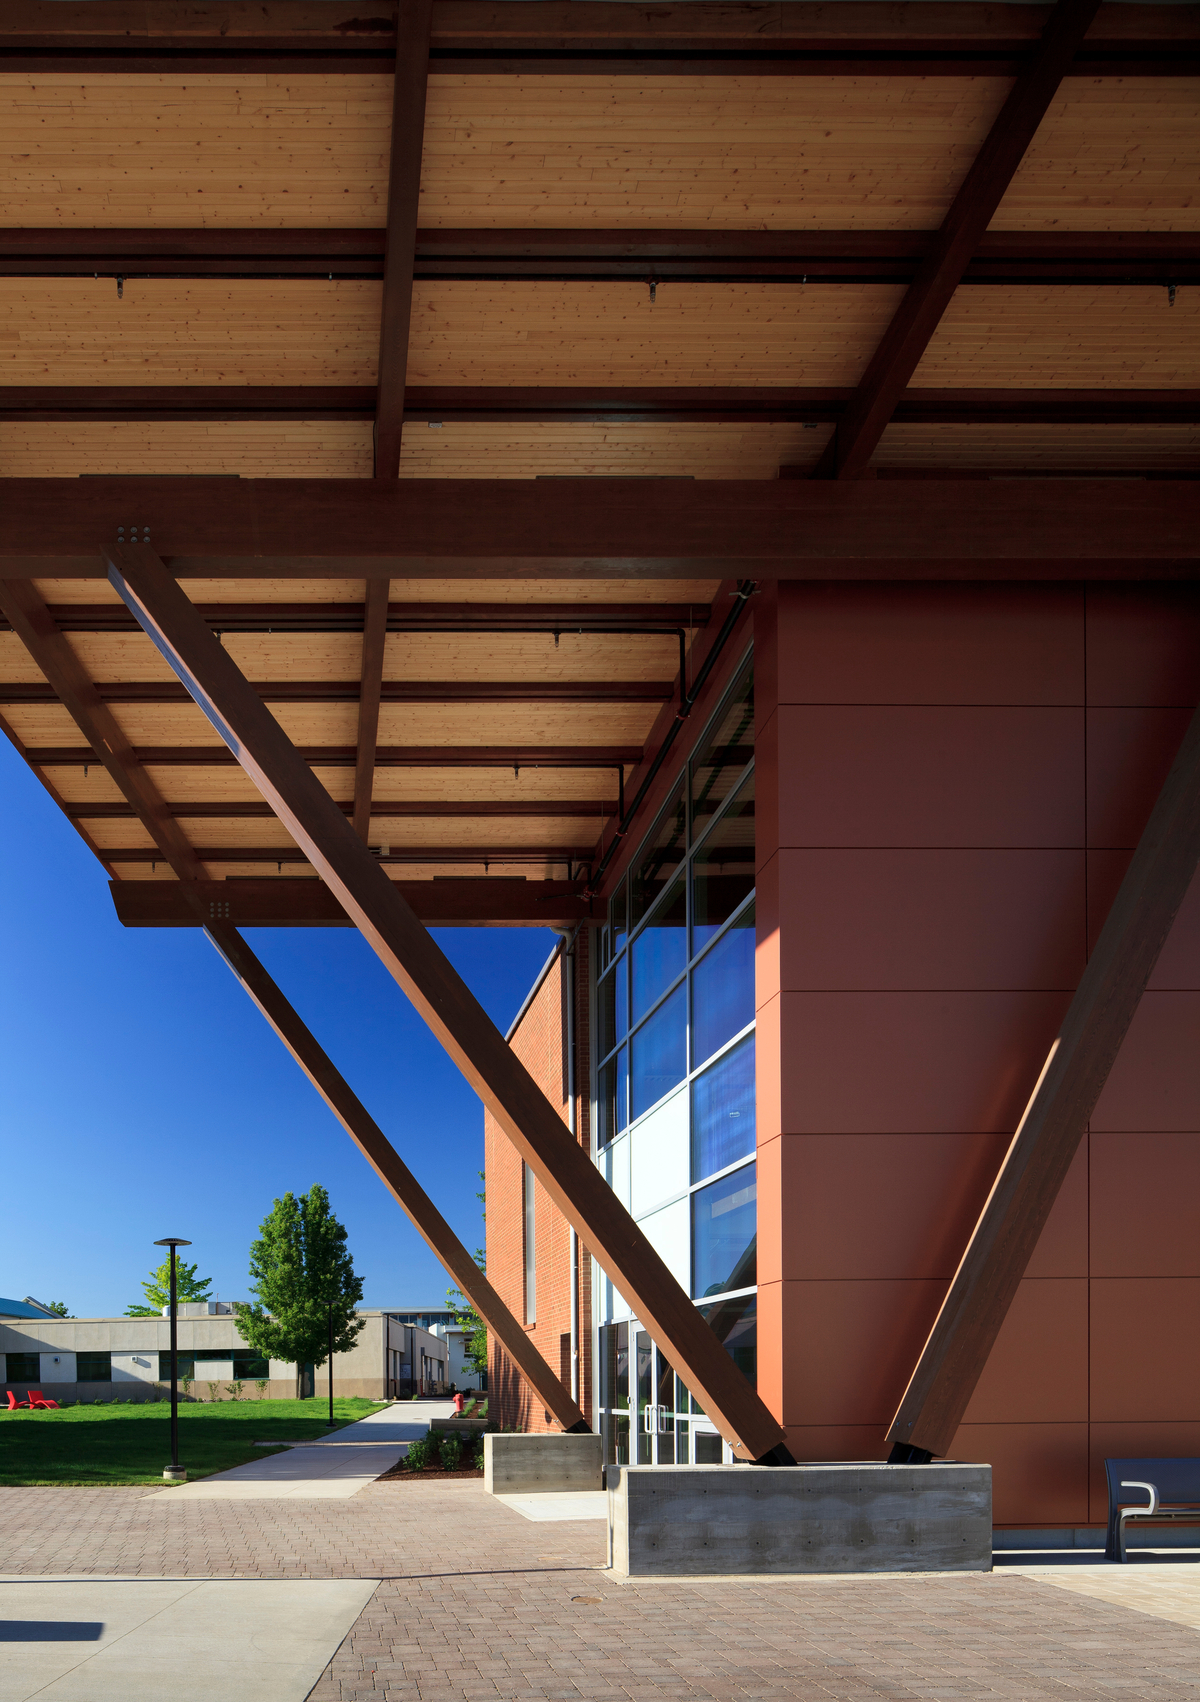 Okanagan学院Jim Pattison Centre of Excellence低层建筑的外部夜景，展示了由胶合木(胶合木)和金属混合结构组成的大型悬垂入口屋顶